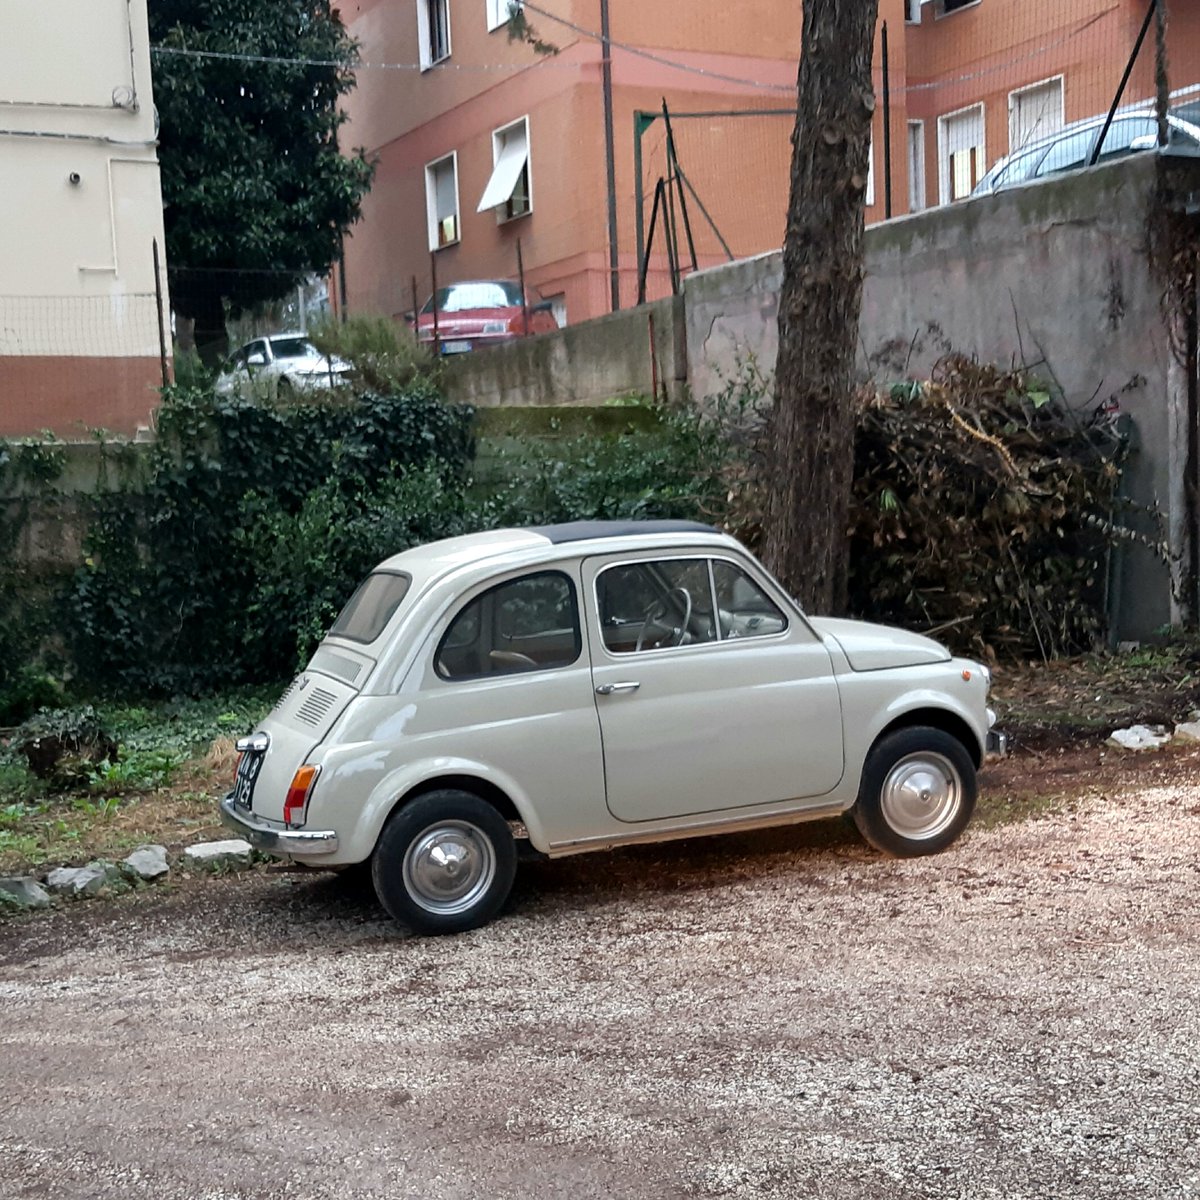 #fiat500 #fiatnuova500 #cinquino🚗 #viaggioinitalia #madeinitaly #italianstyle🇮🇹 #streetphotography